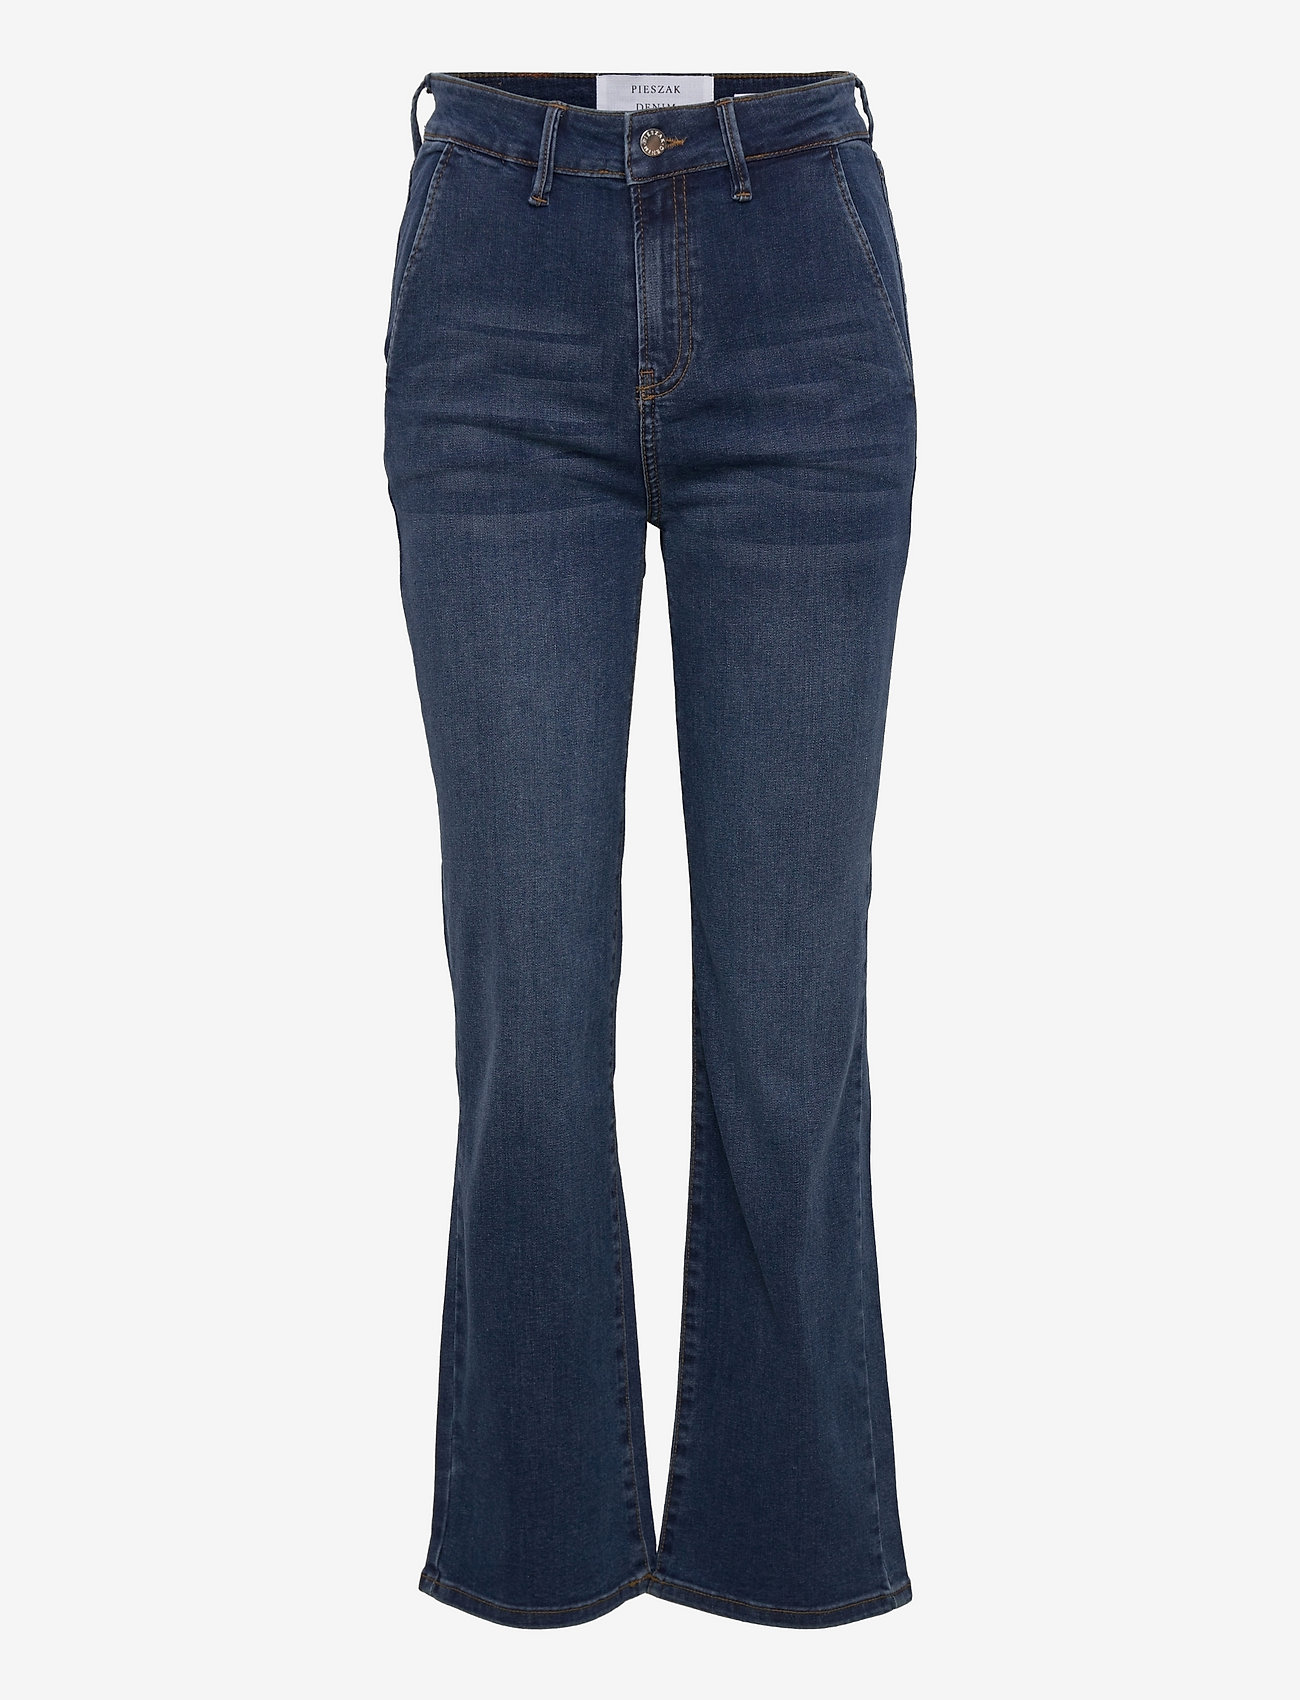 Pieszak - Jenora french jeans wash Malcesine - schlaghosen - denim blue - 0